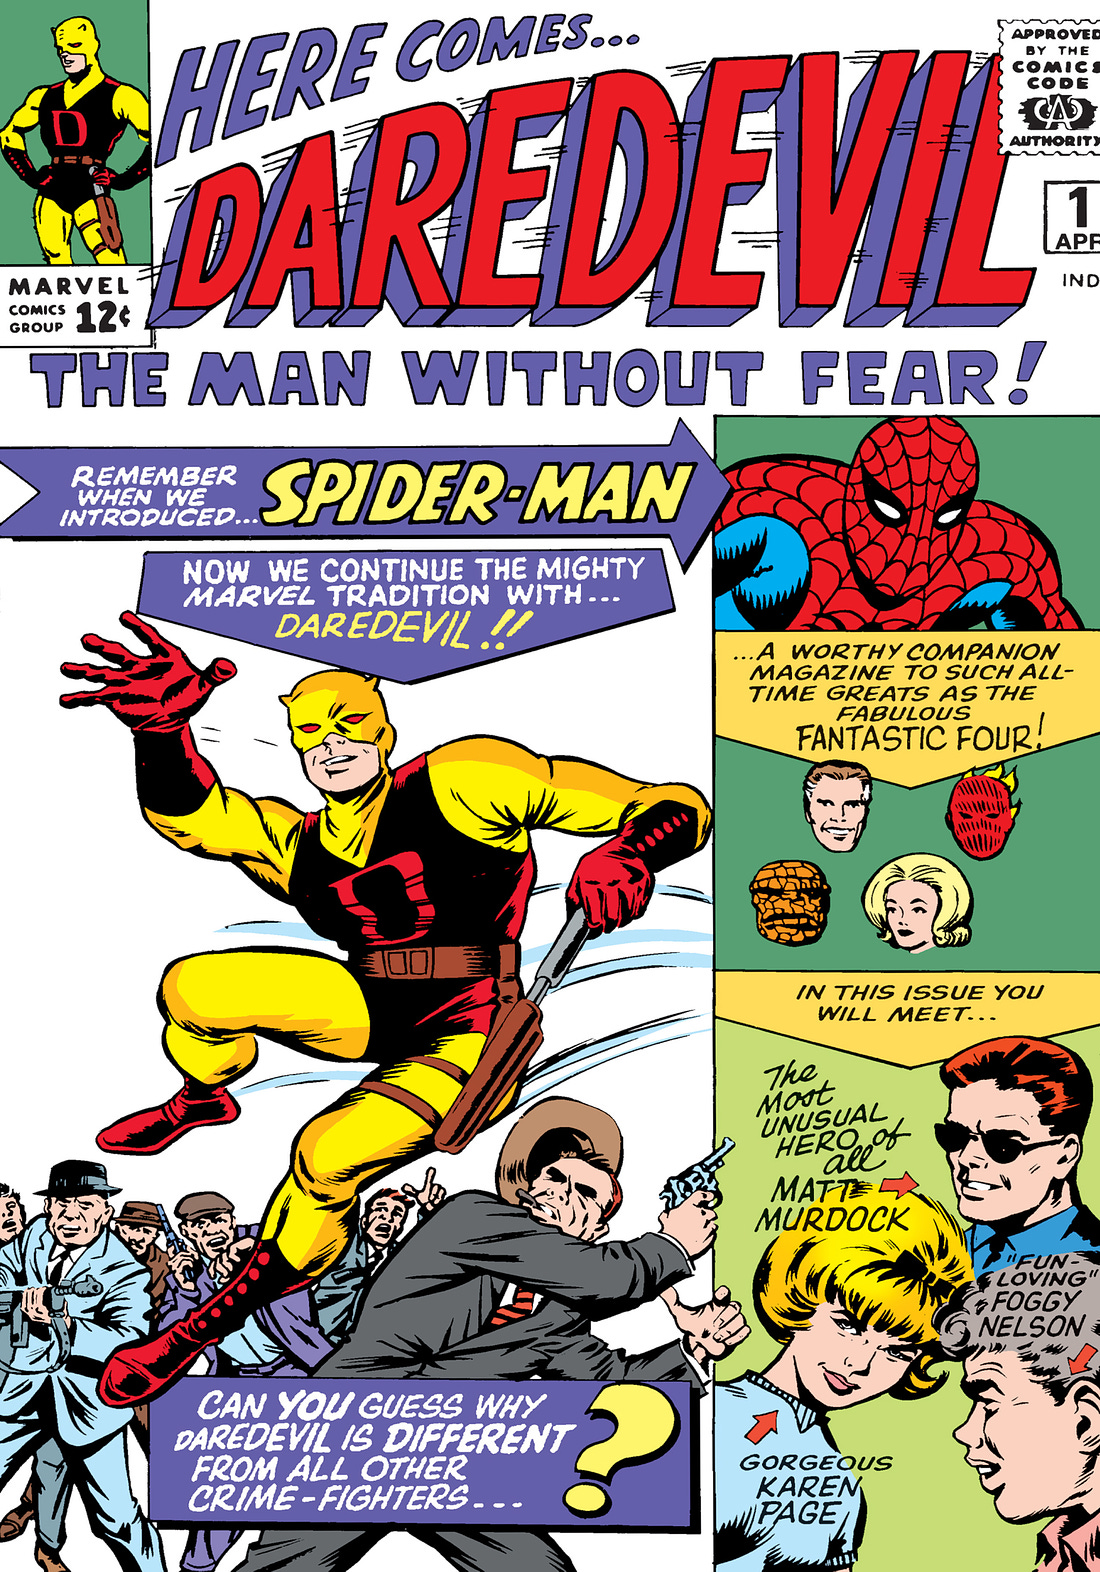 Daredevil (1964) #1 | Comic Issues | Marvel